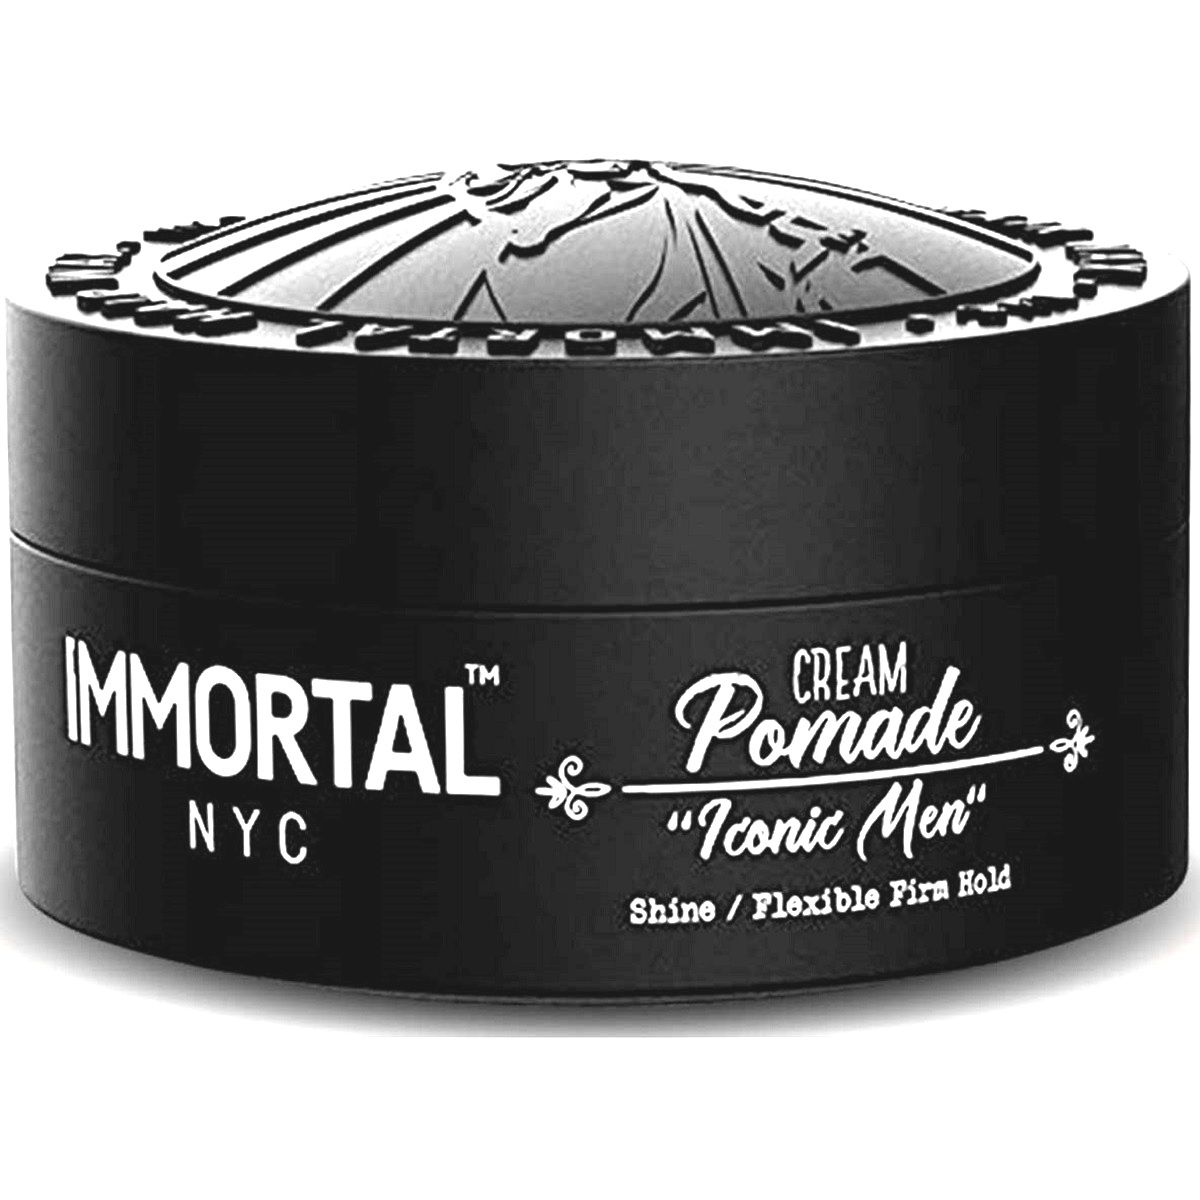 Immortal NYC Cream Pomade - Iconic Man 5.07oz